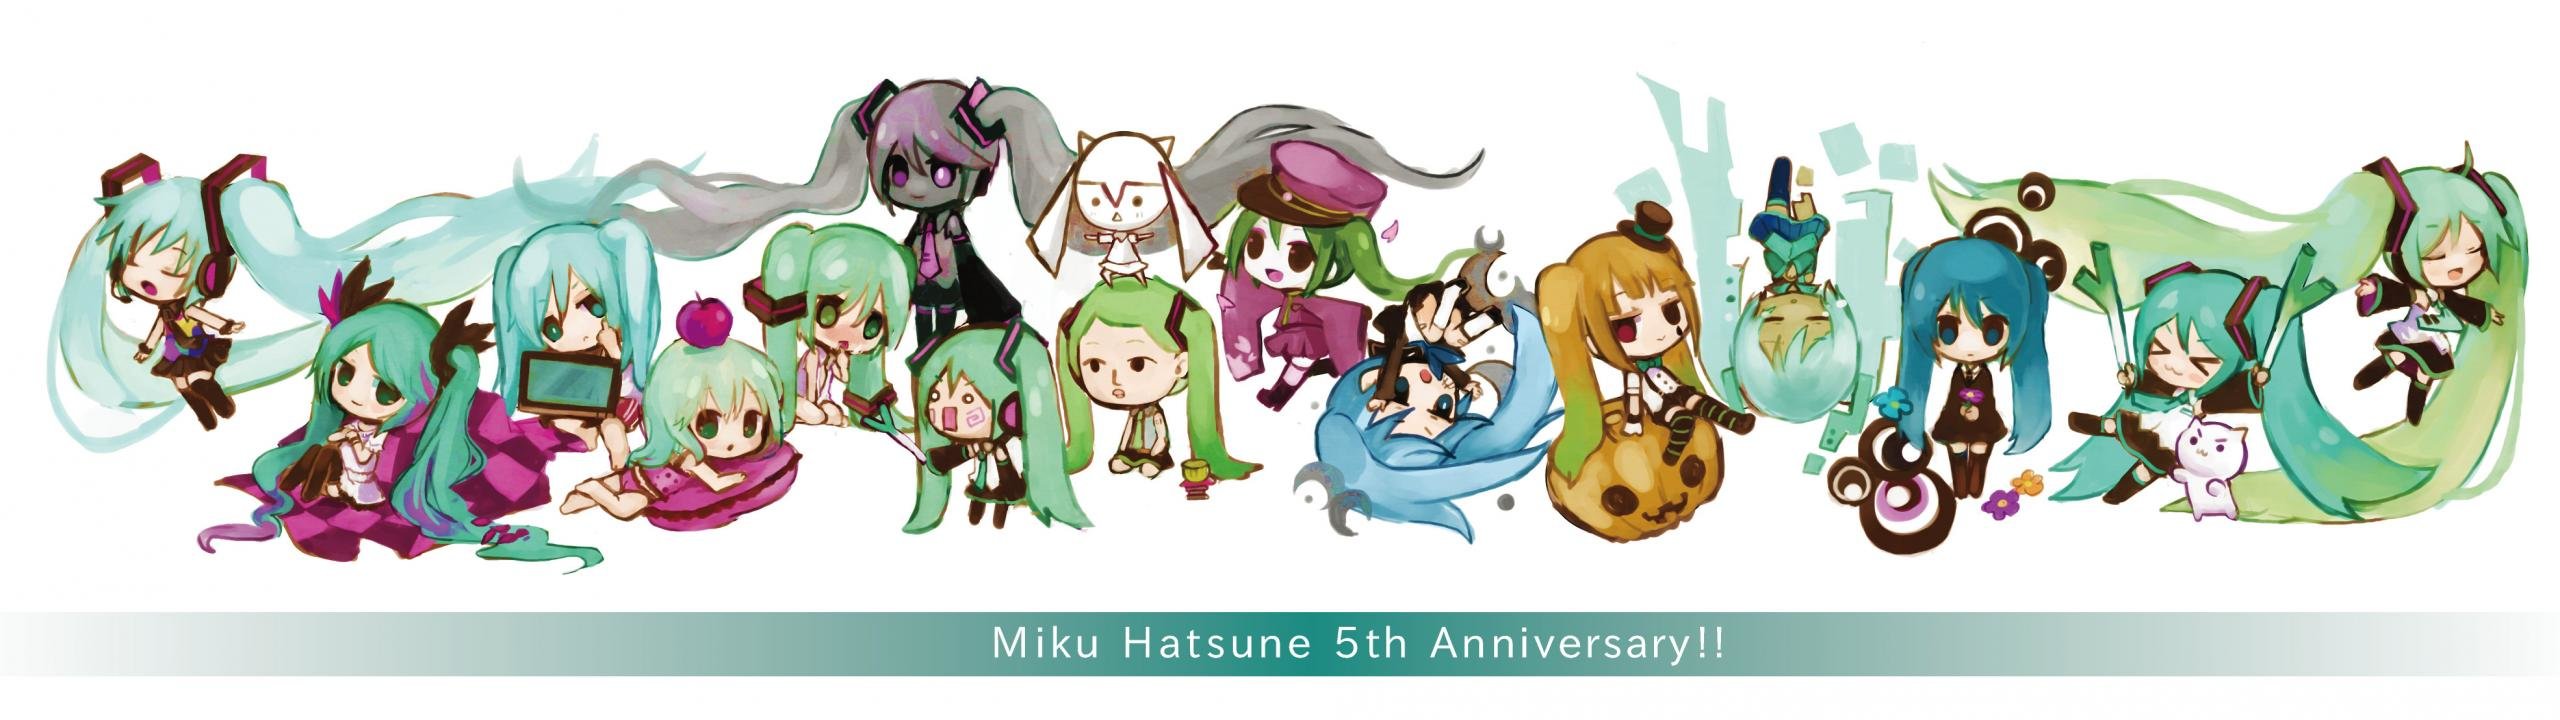 Best Hatsune Miku wallpaper ID:5737 for High Resolution dual screen 2560x720 PC